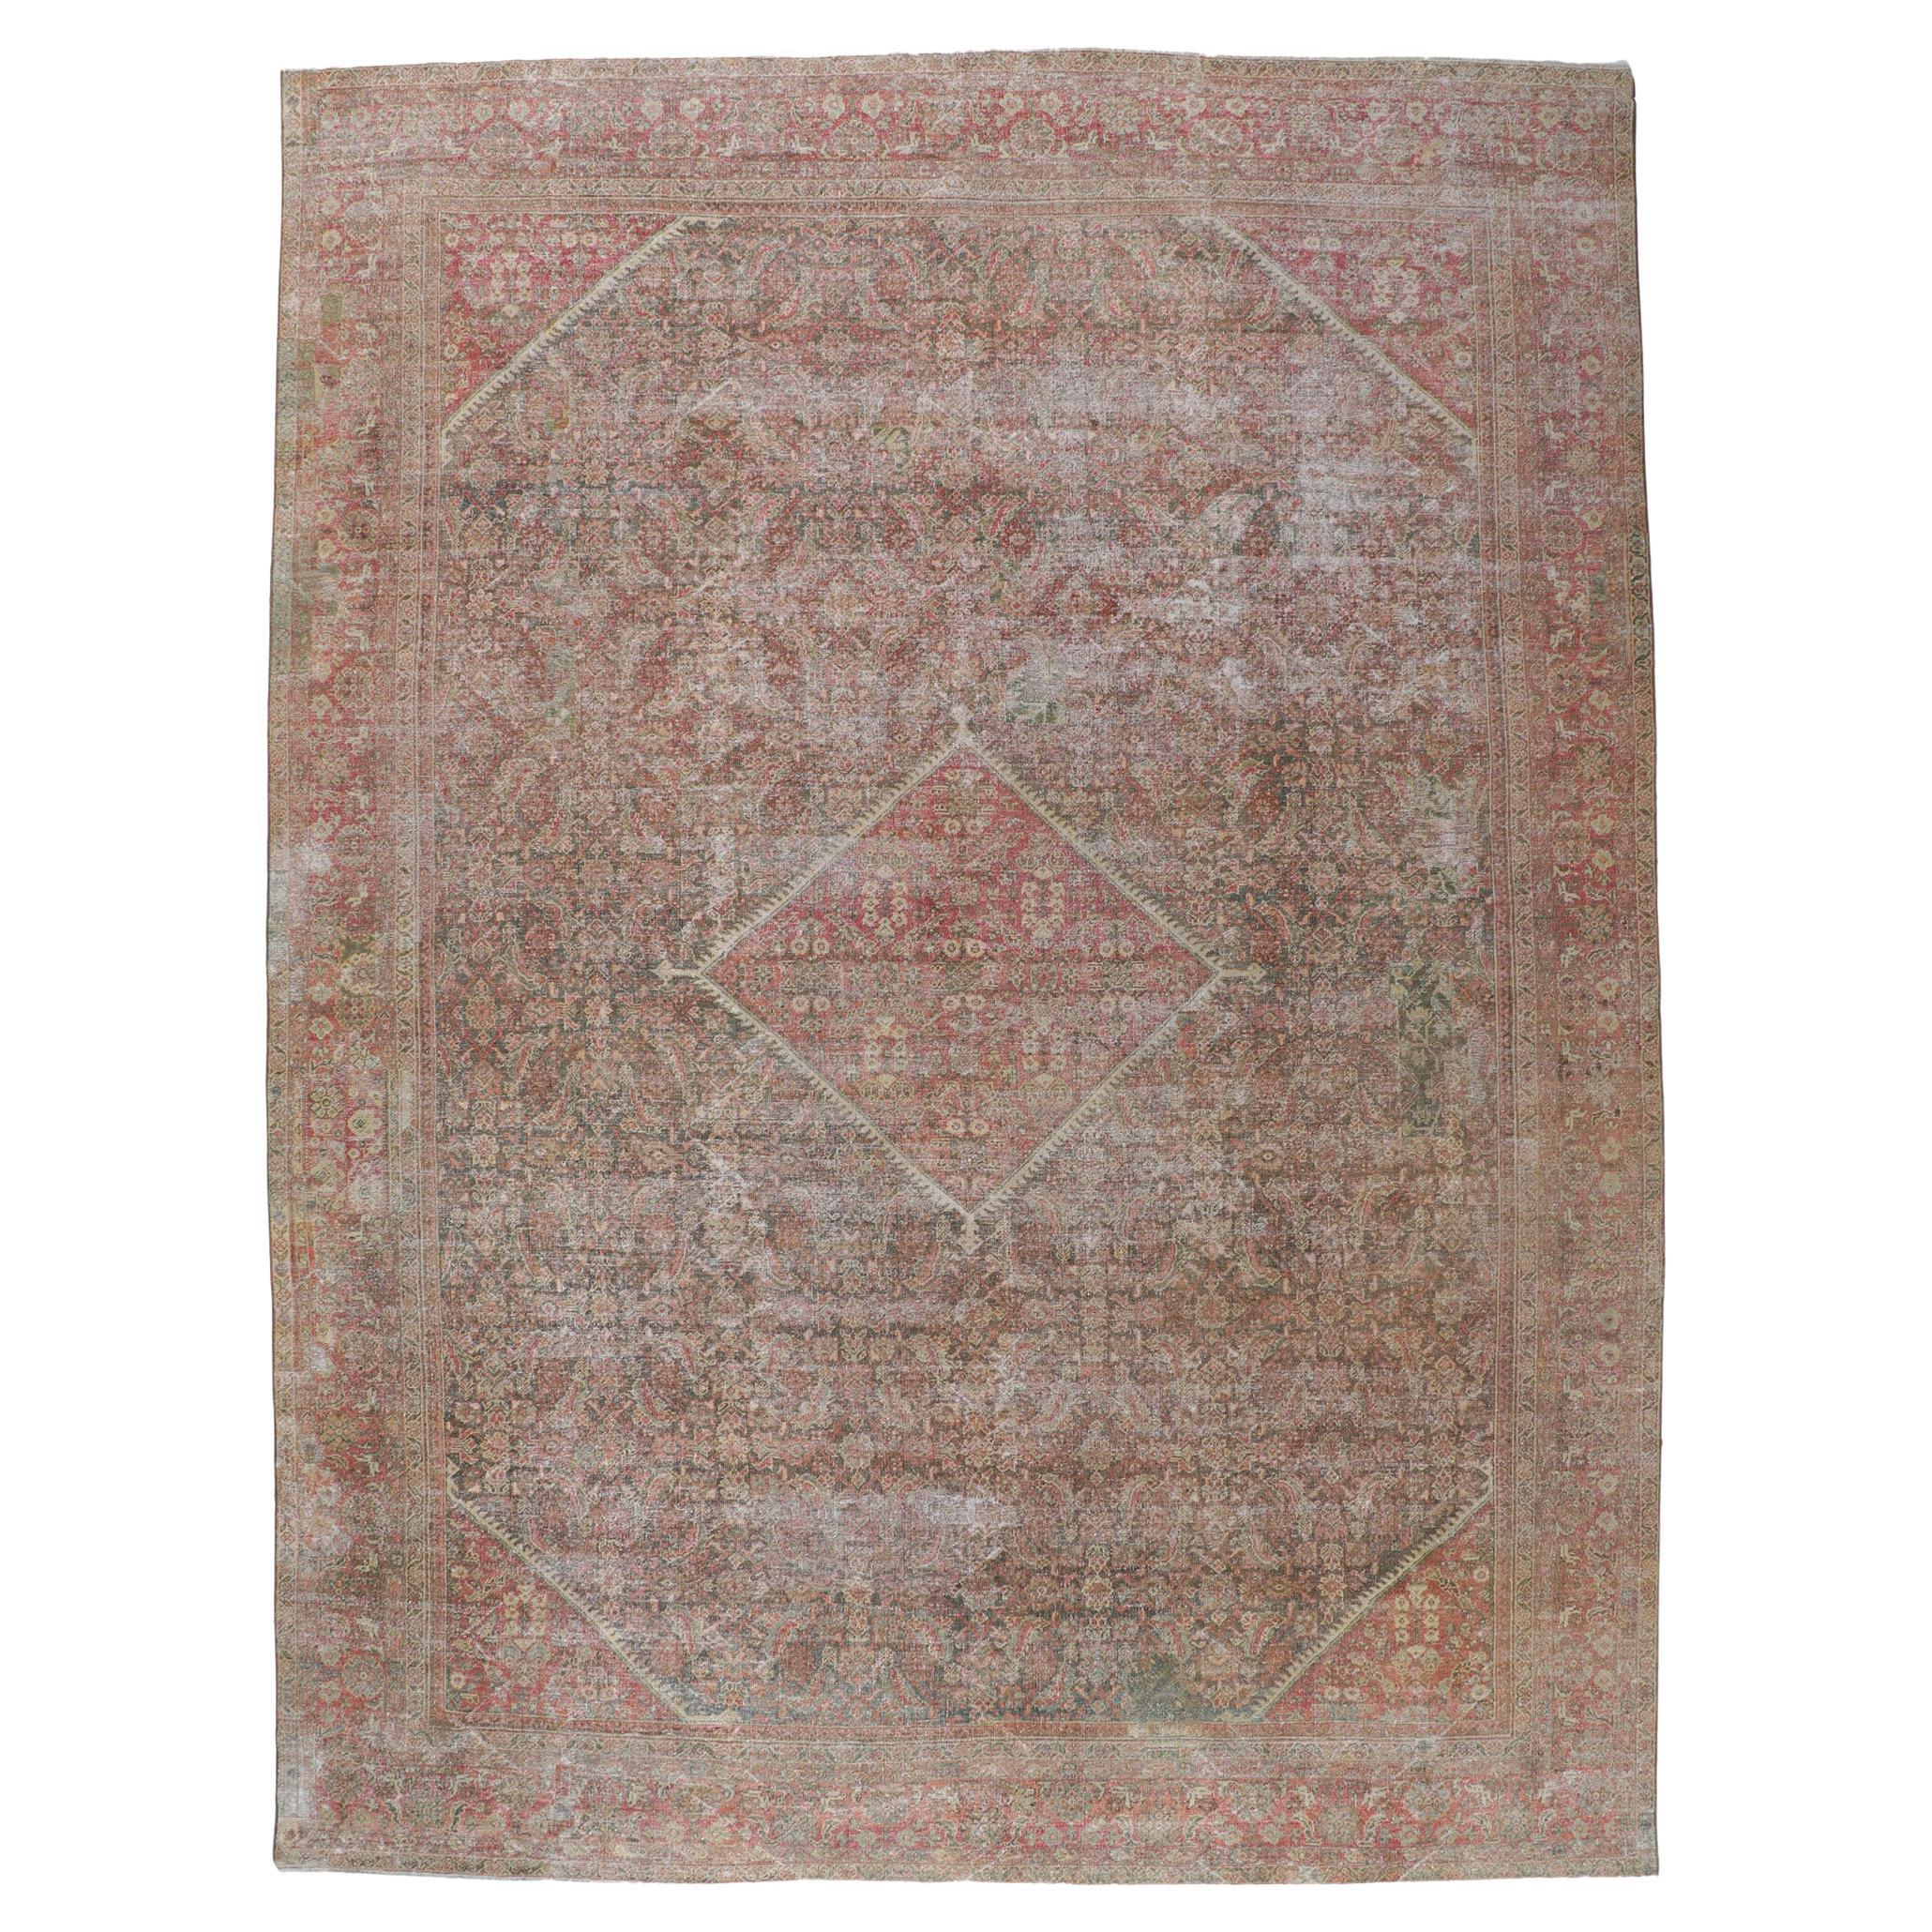 Distressed Antique Persian Mahal Rug